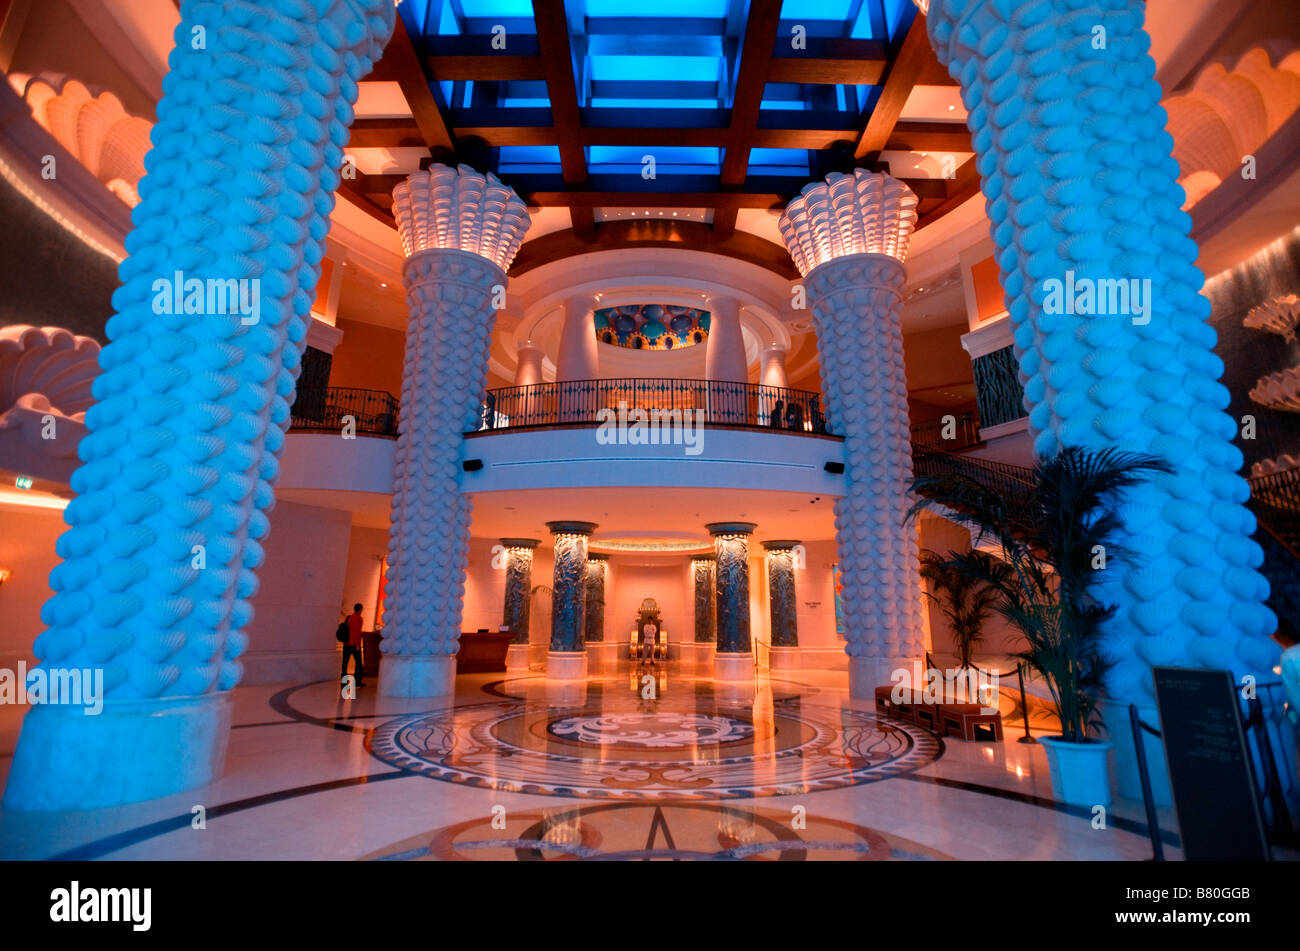 die Lobby des Hotels Atlantis auf Palm Jumeirah Dubai Stockfoto